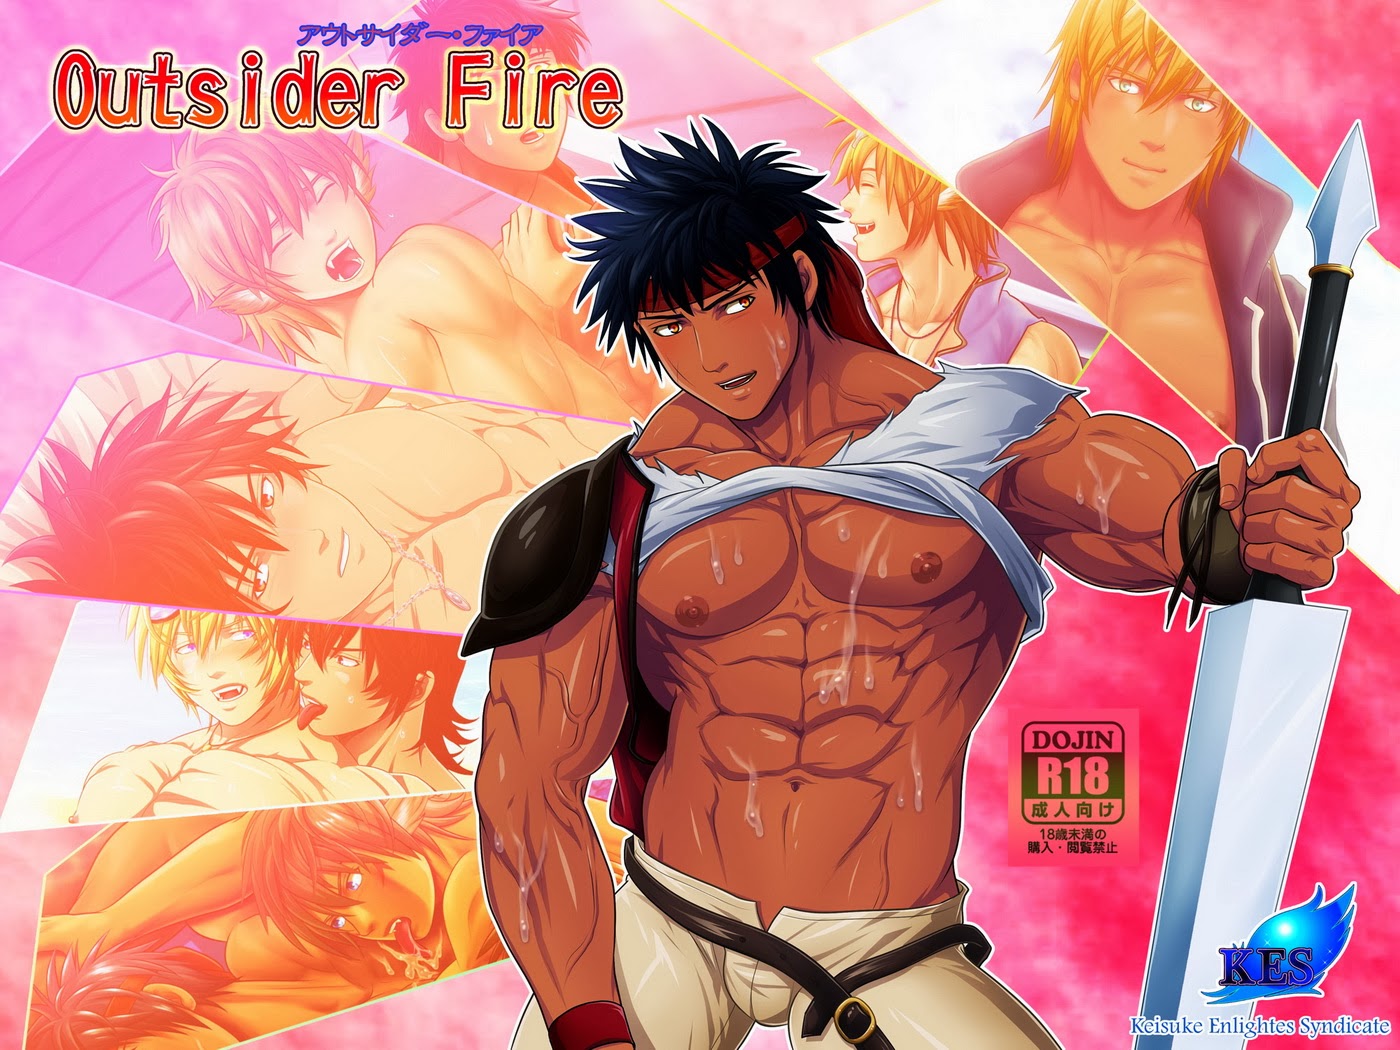 Keisuke Enlightes Syndicate KES Outsider Fire